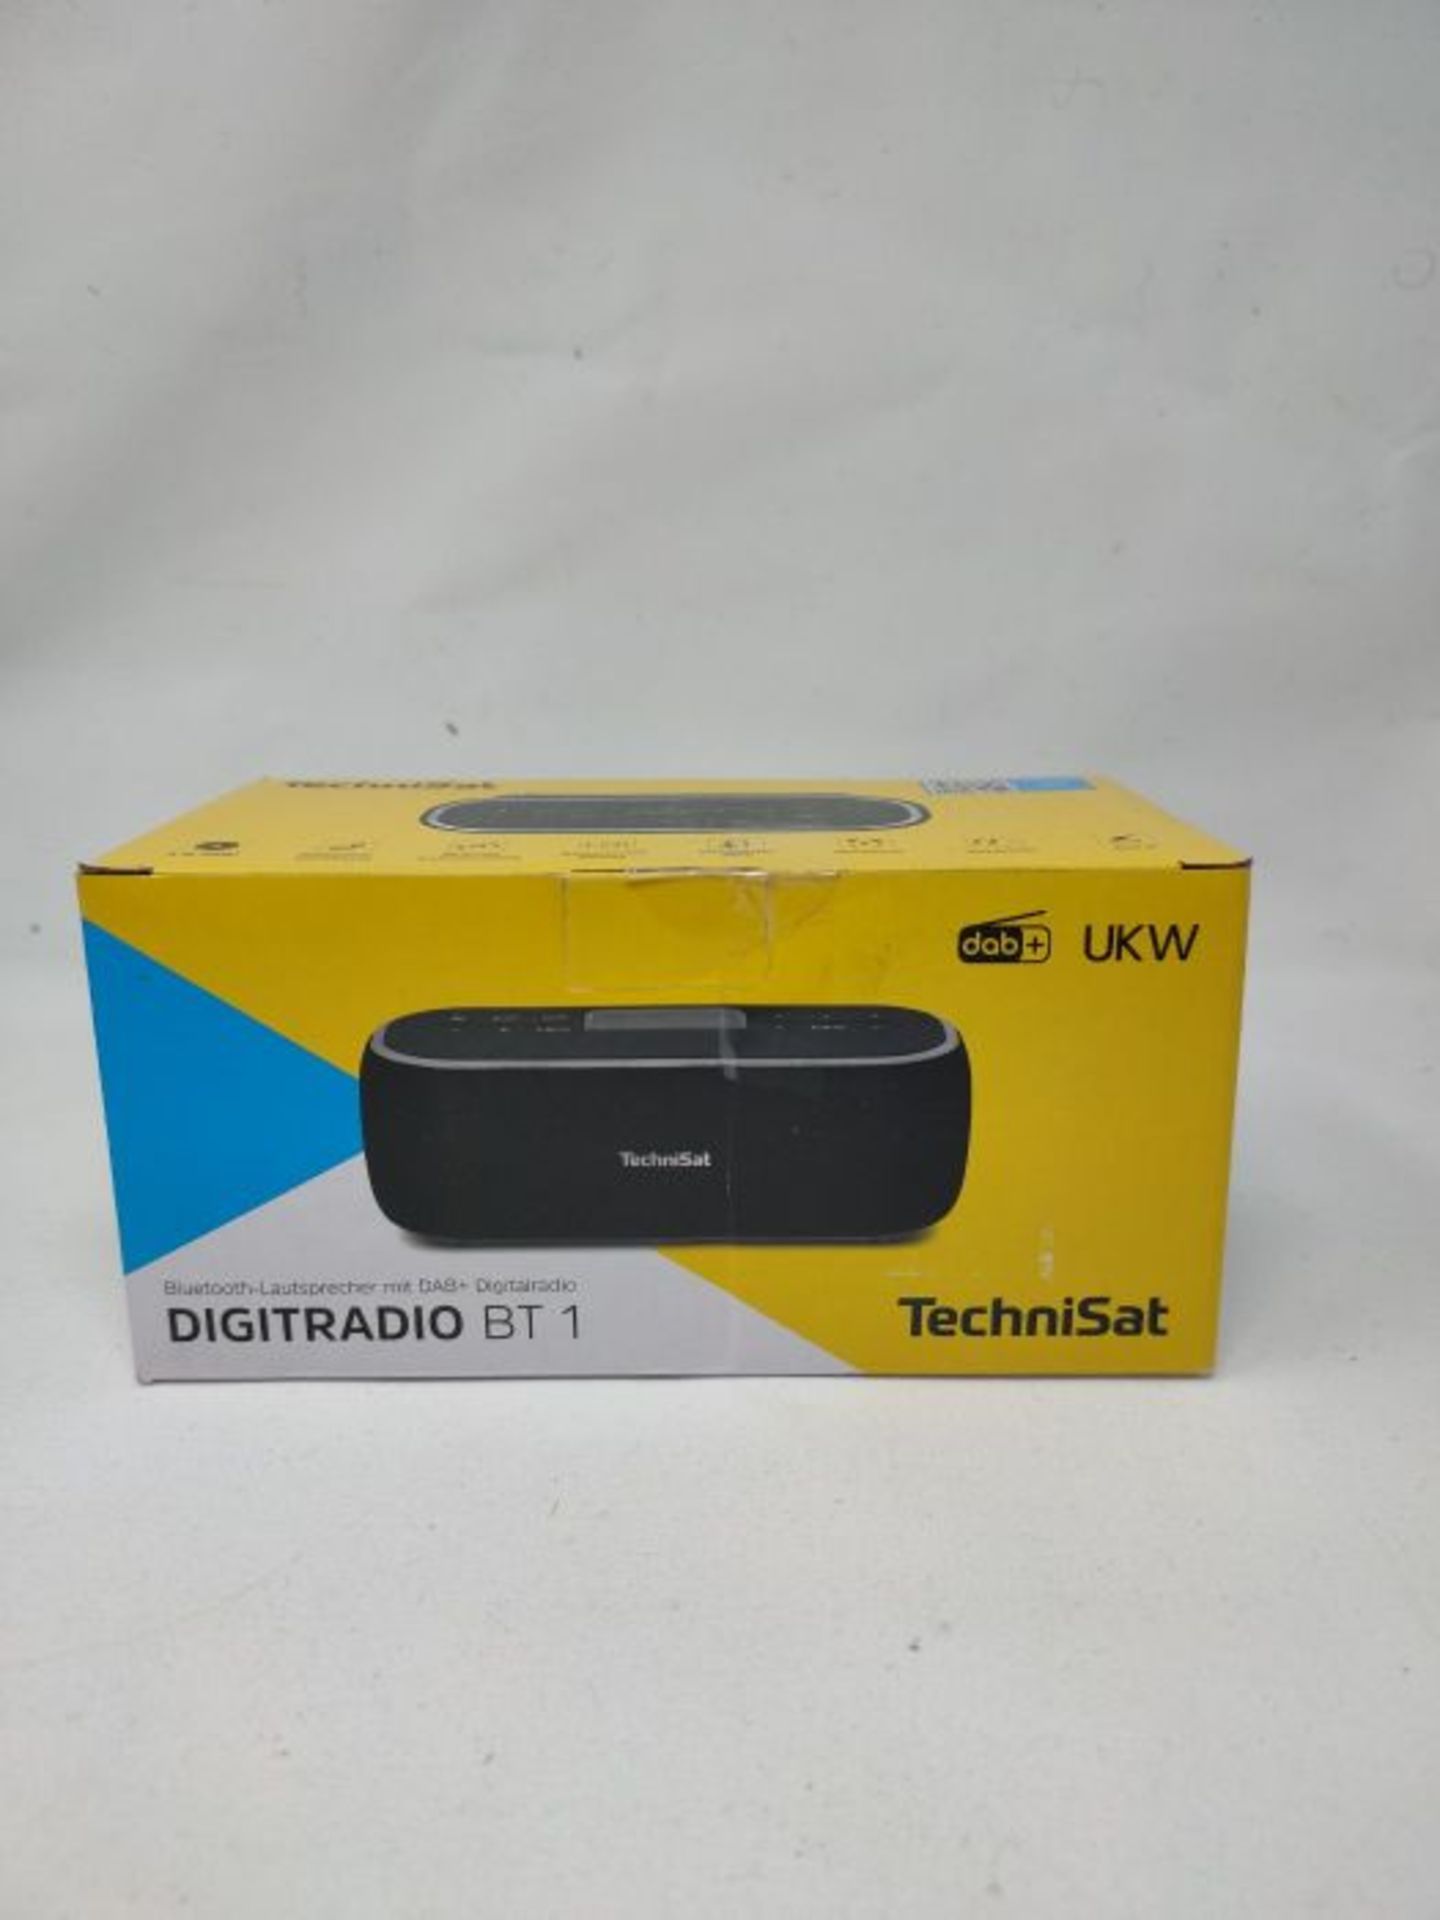 RRP £52.00 TechniSat DIGITRADIO BT 1 - tragbarer Bluetooth-Lautsprecher mit DAB+ Digitalradio (UK - Image 2 of 3